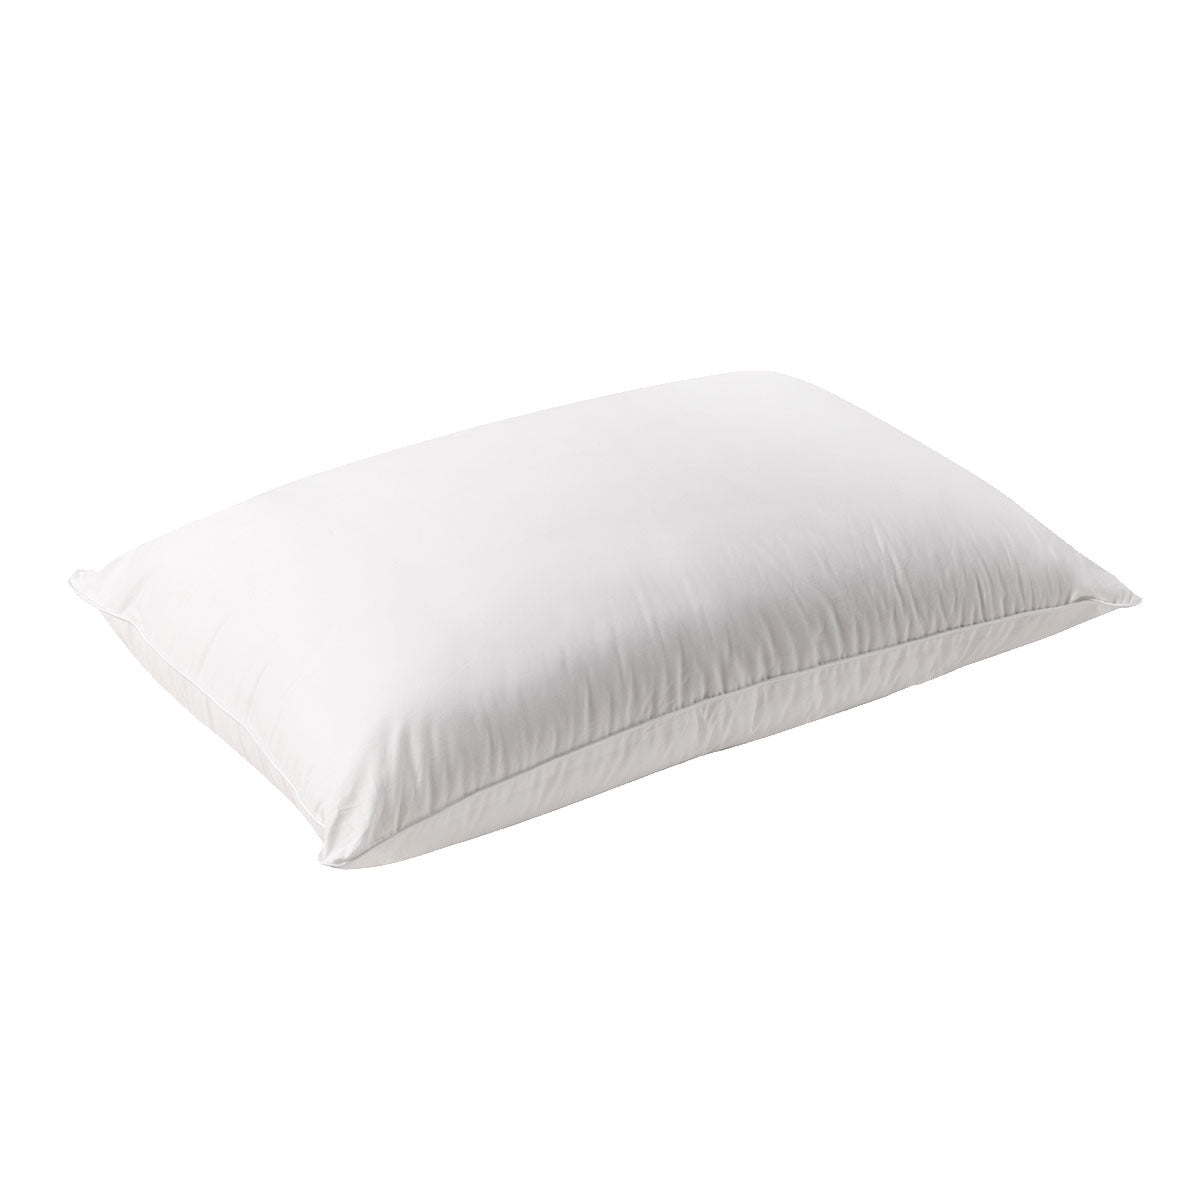 Bianca Bamboo Blend Hypoallergenic Medium Profile Pillow - Dust Mite Allergy Solutions